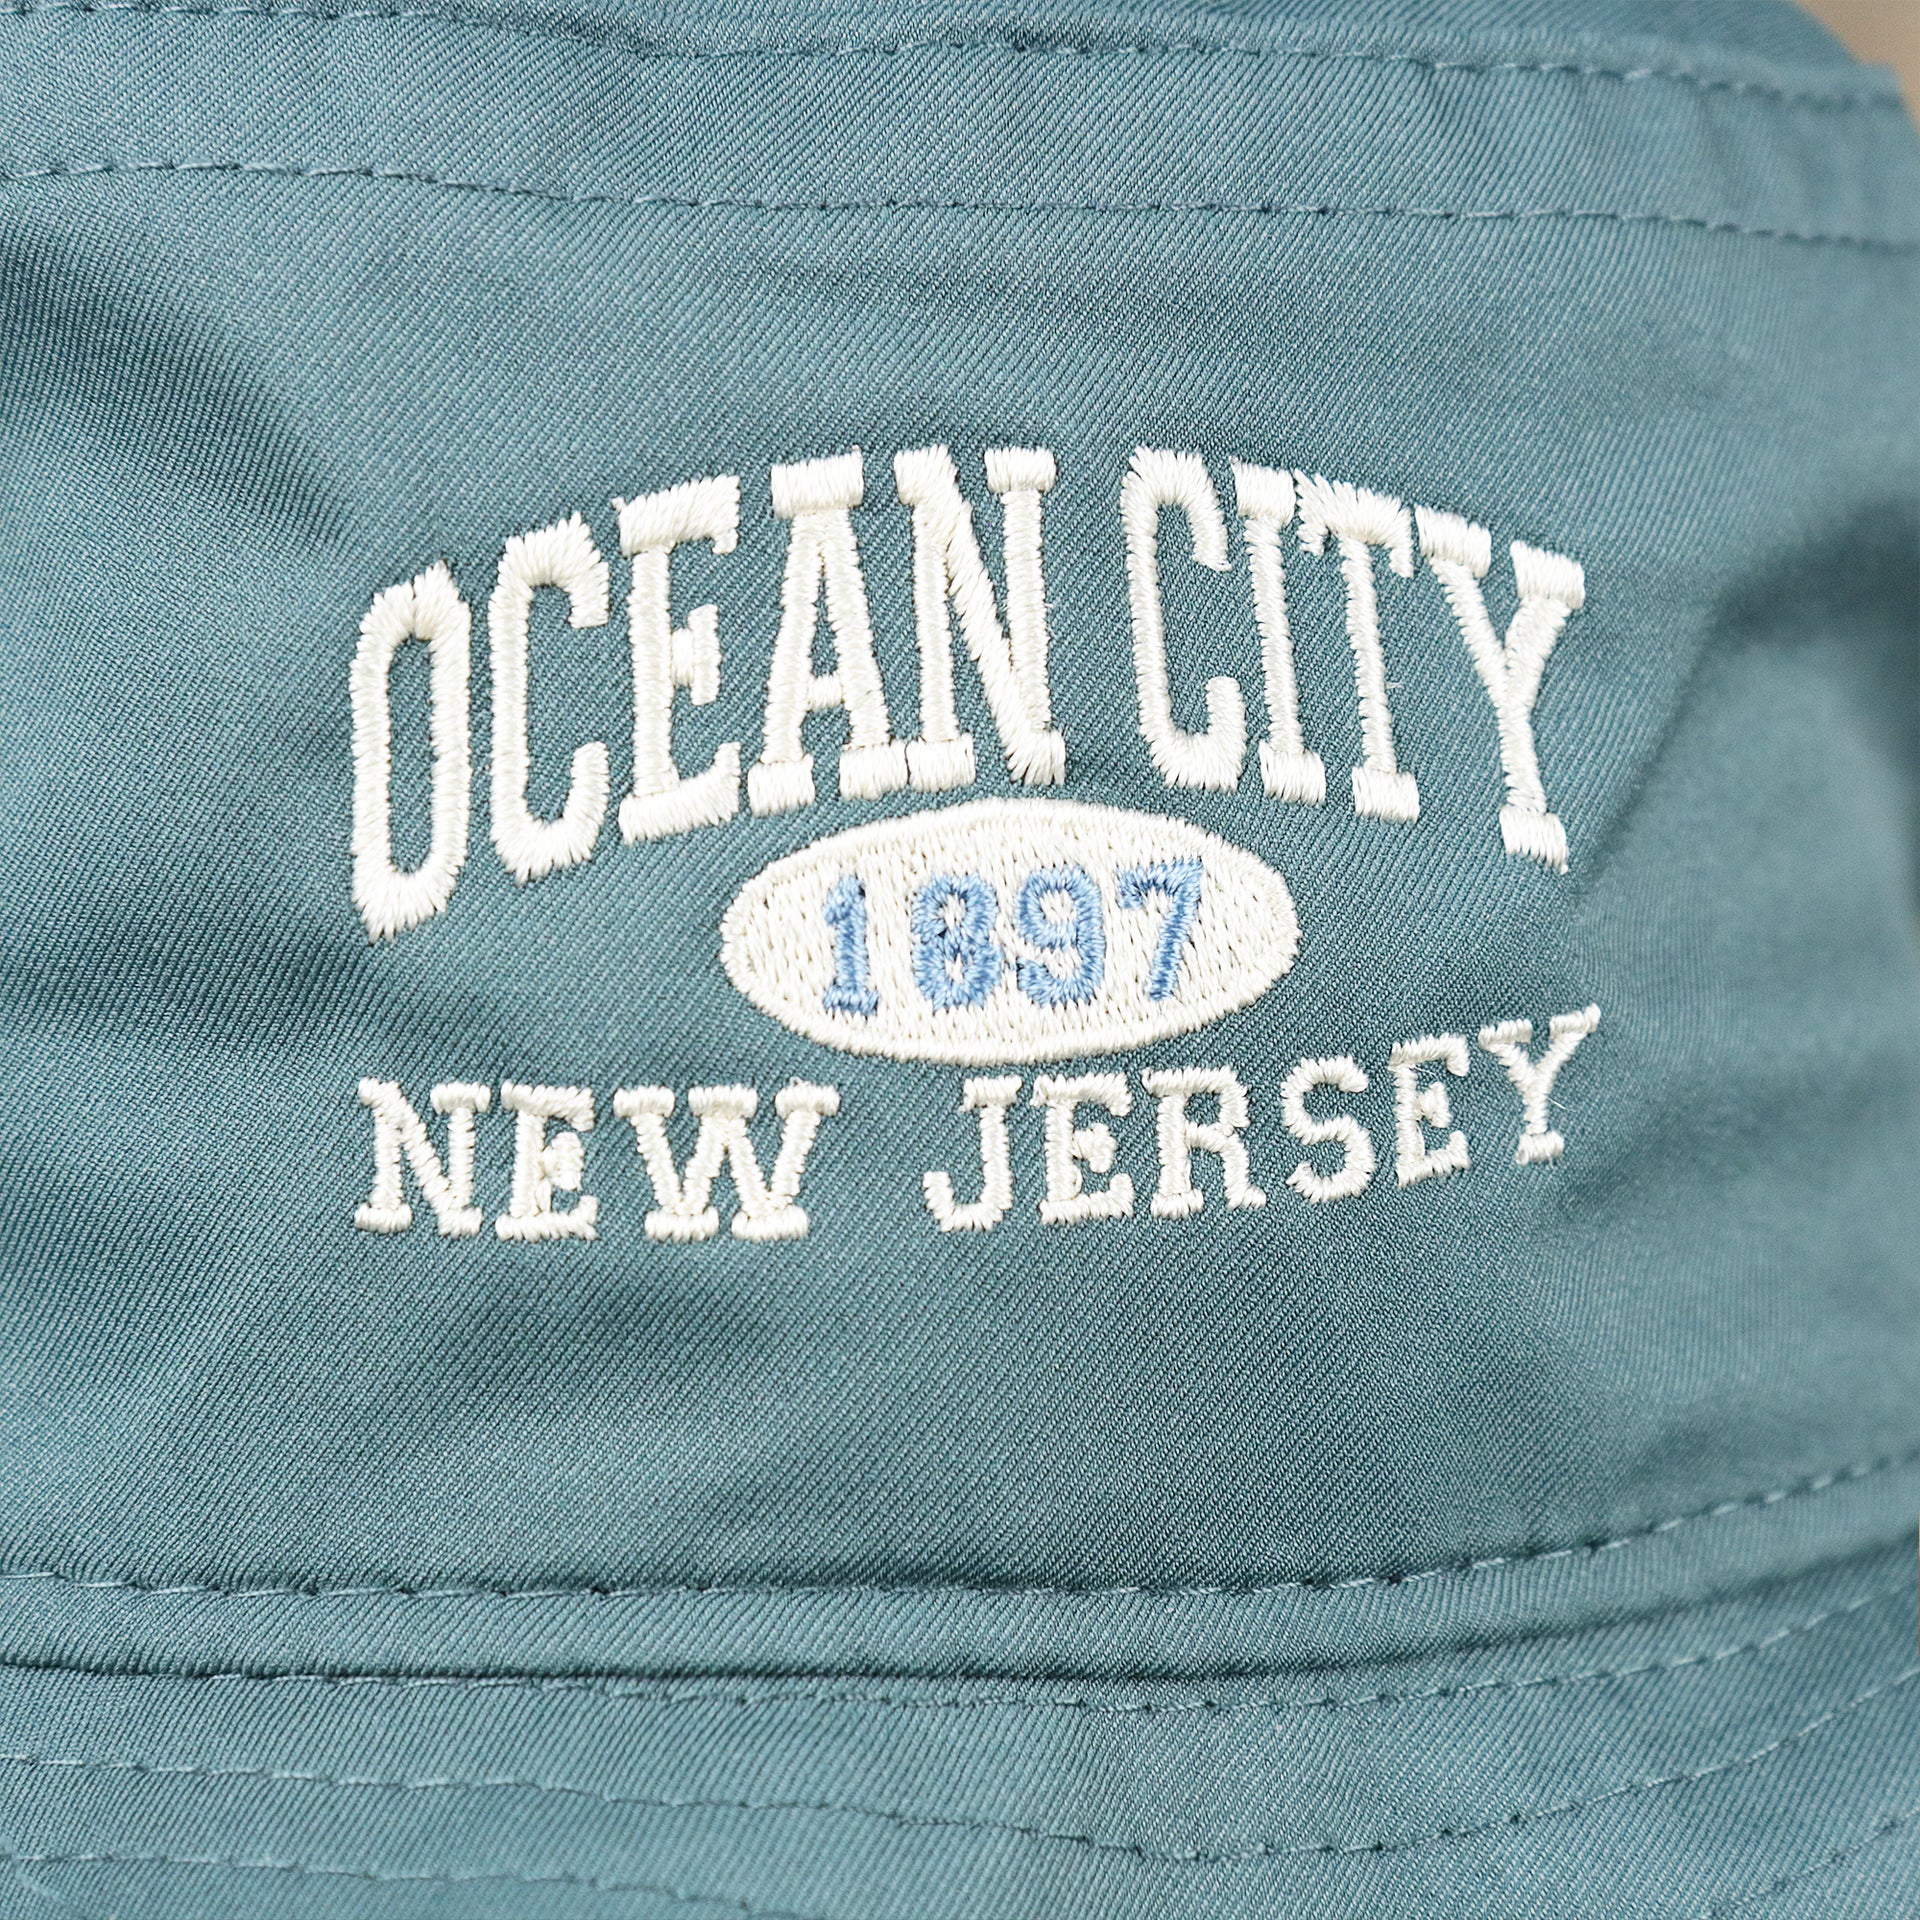 The Ocean City New Jersey Wordmark on the Ocean City New Jersey 1897 Bucket Hat | Blue Steel Bucket Hat